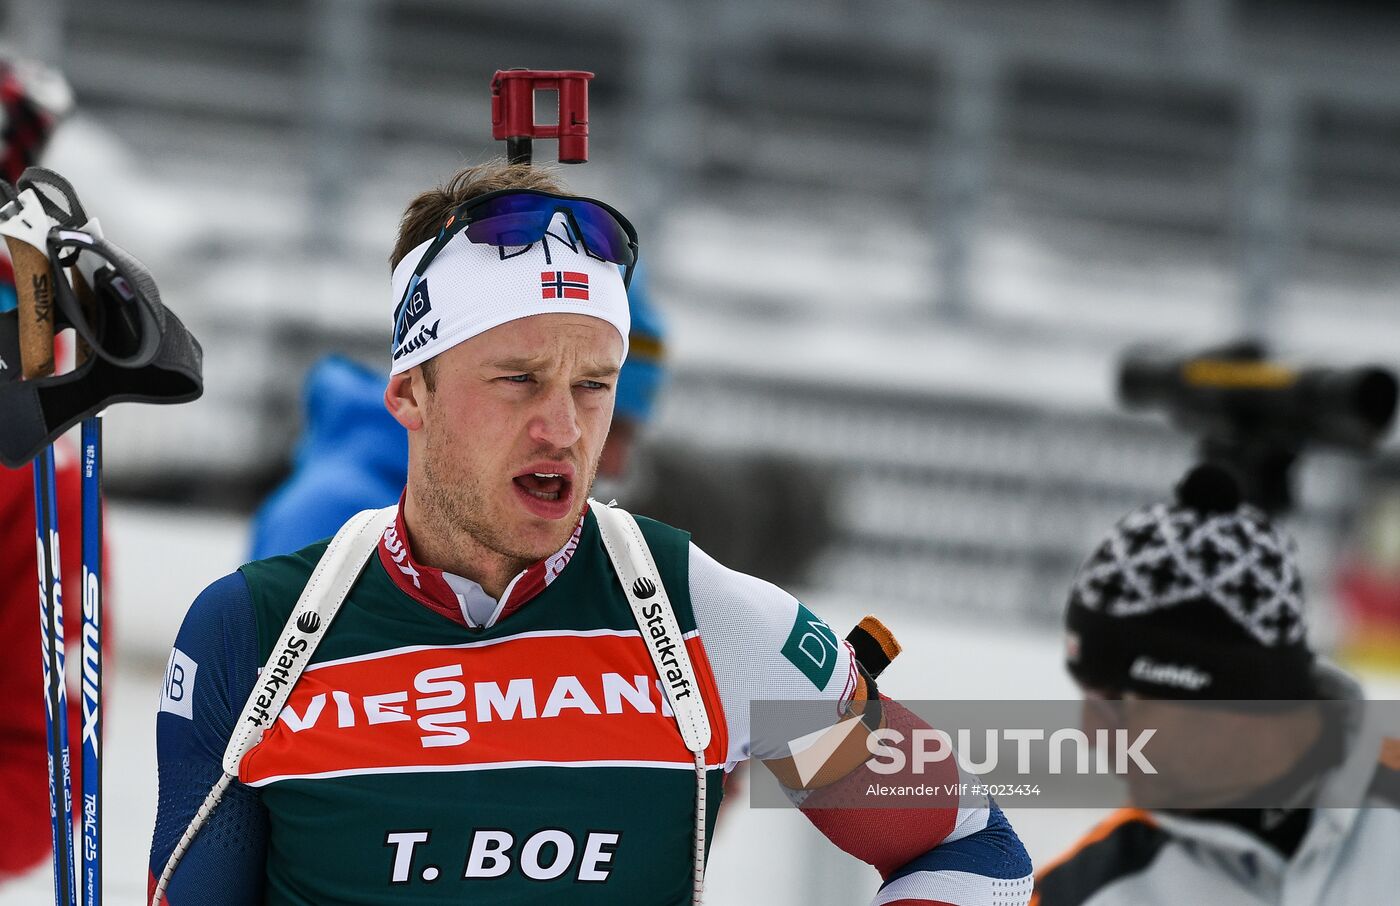 2016–17 Biathlon World Cup. Training sessions